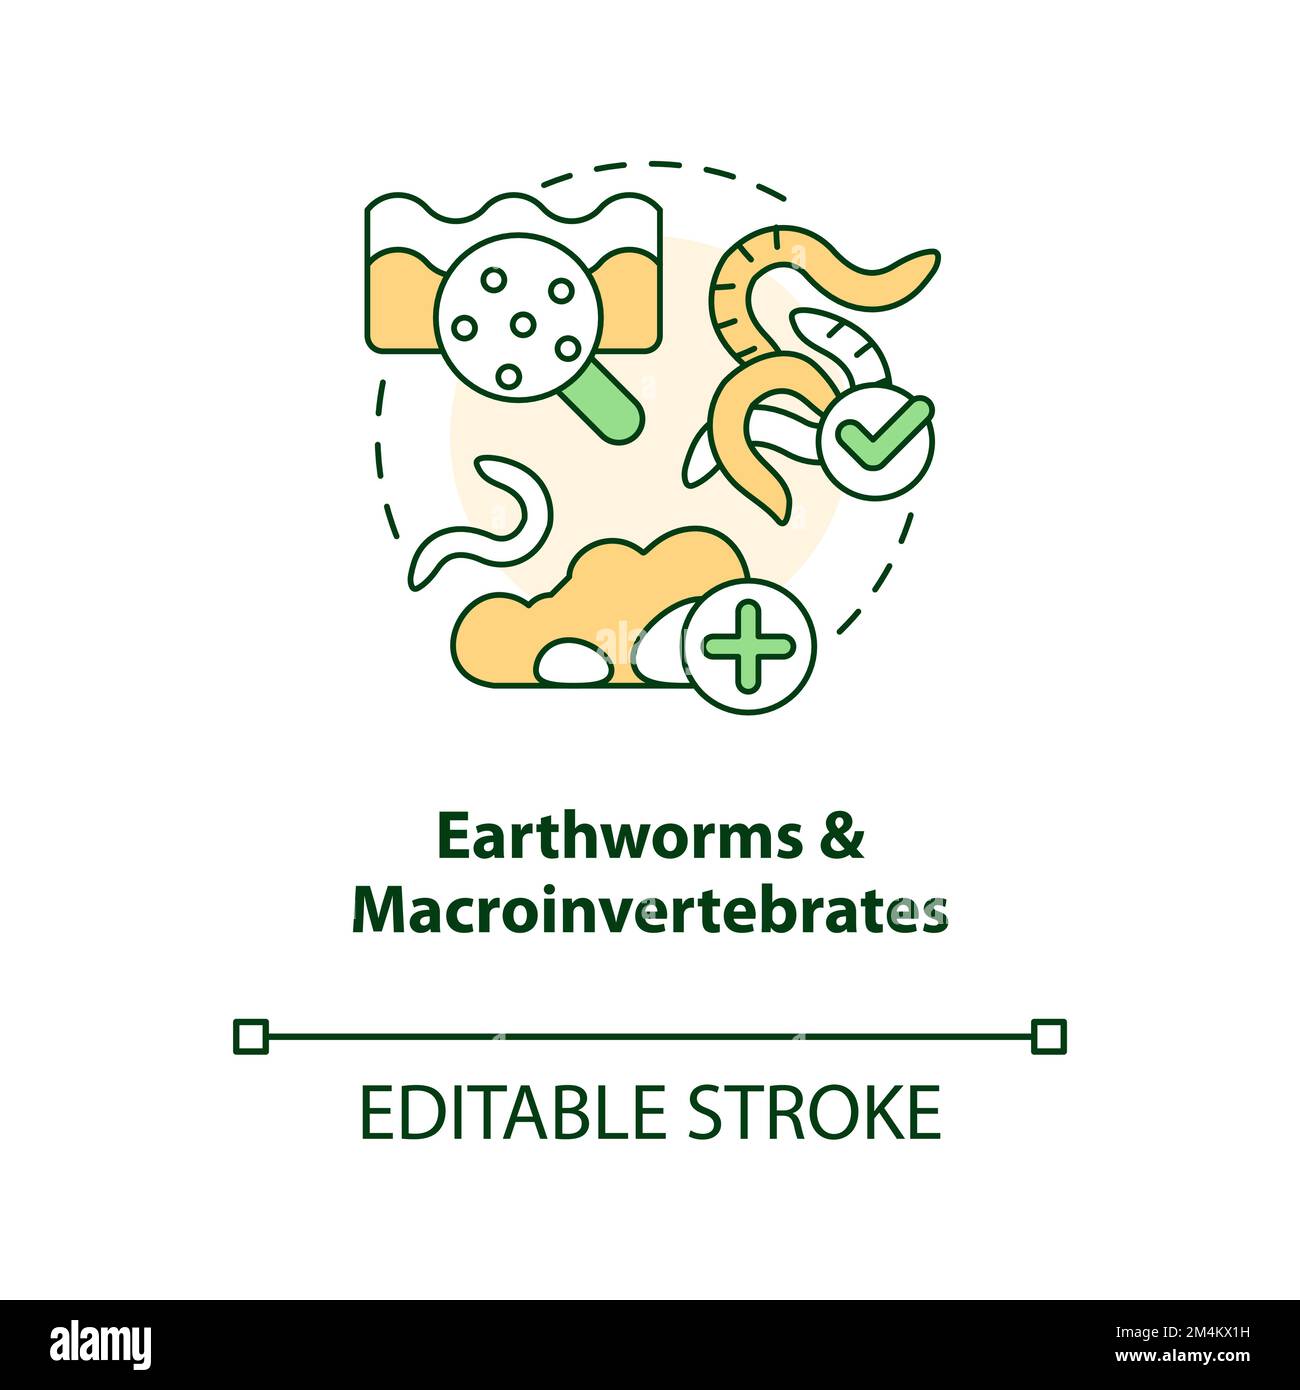 Earthworms and macroinvertebrates concept icon Stock Vector